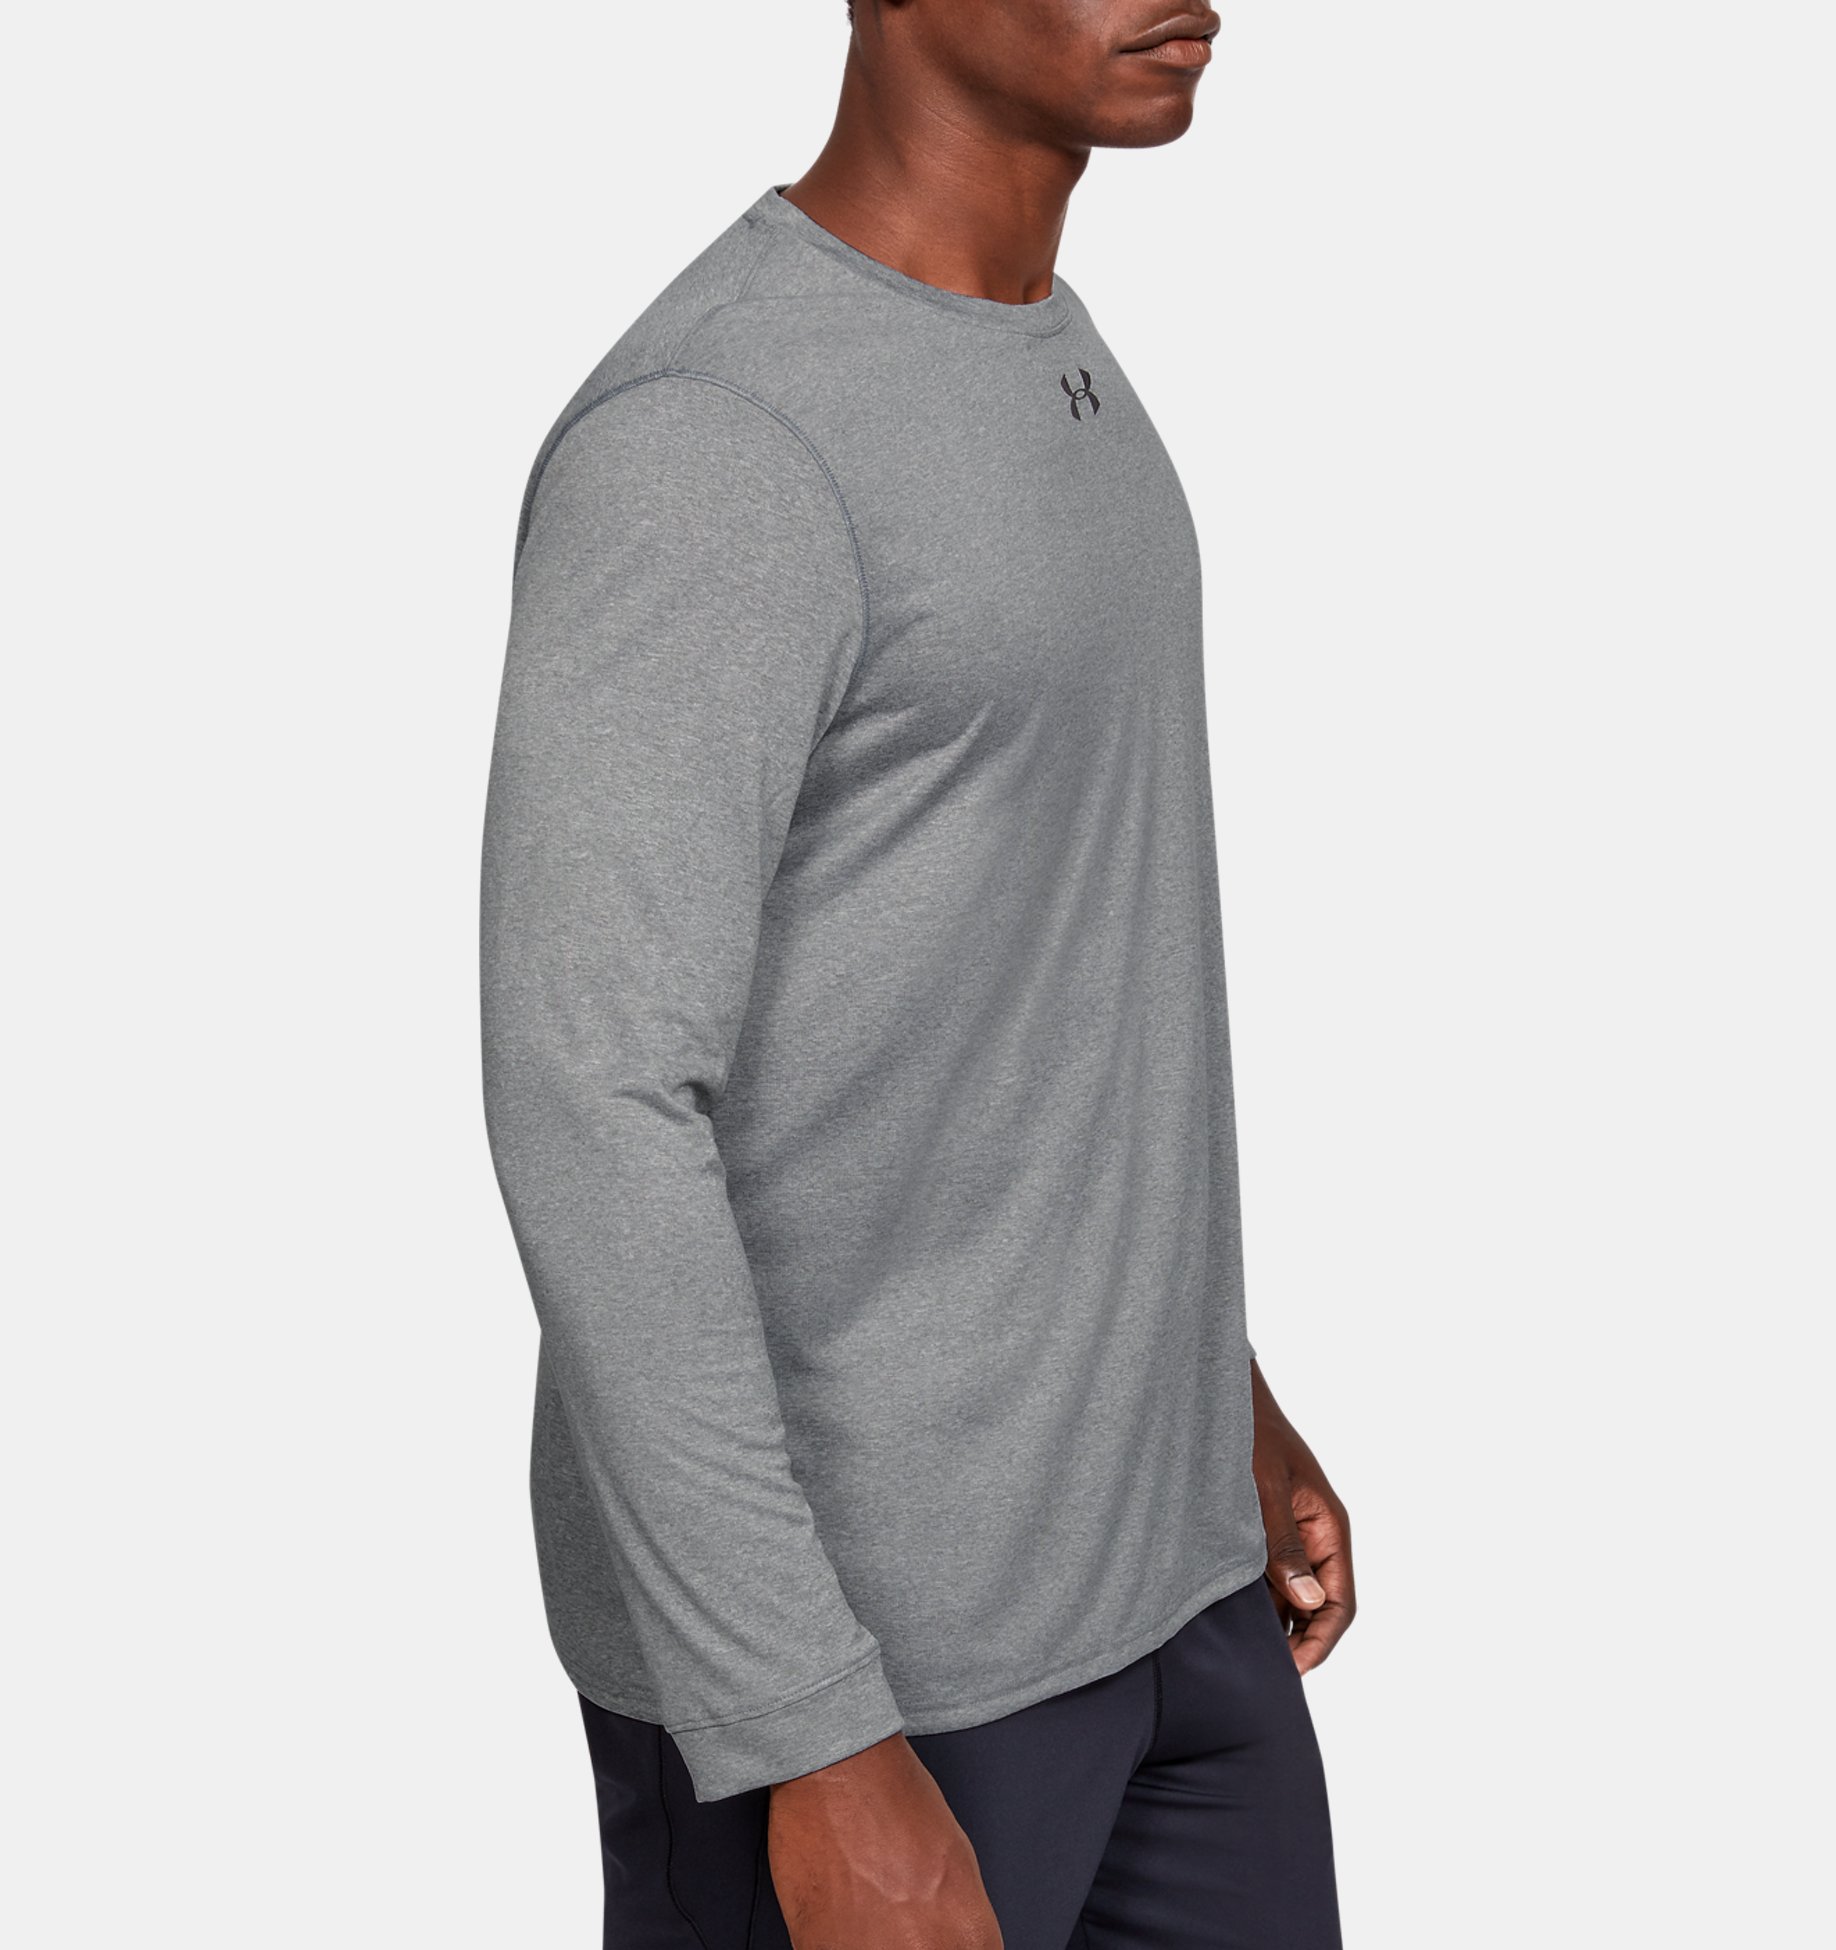 Details about   Under Armour Men's Novelty Locker Long SleeveTee T-Shirt Jersey UA Color Choice 